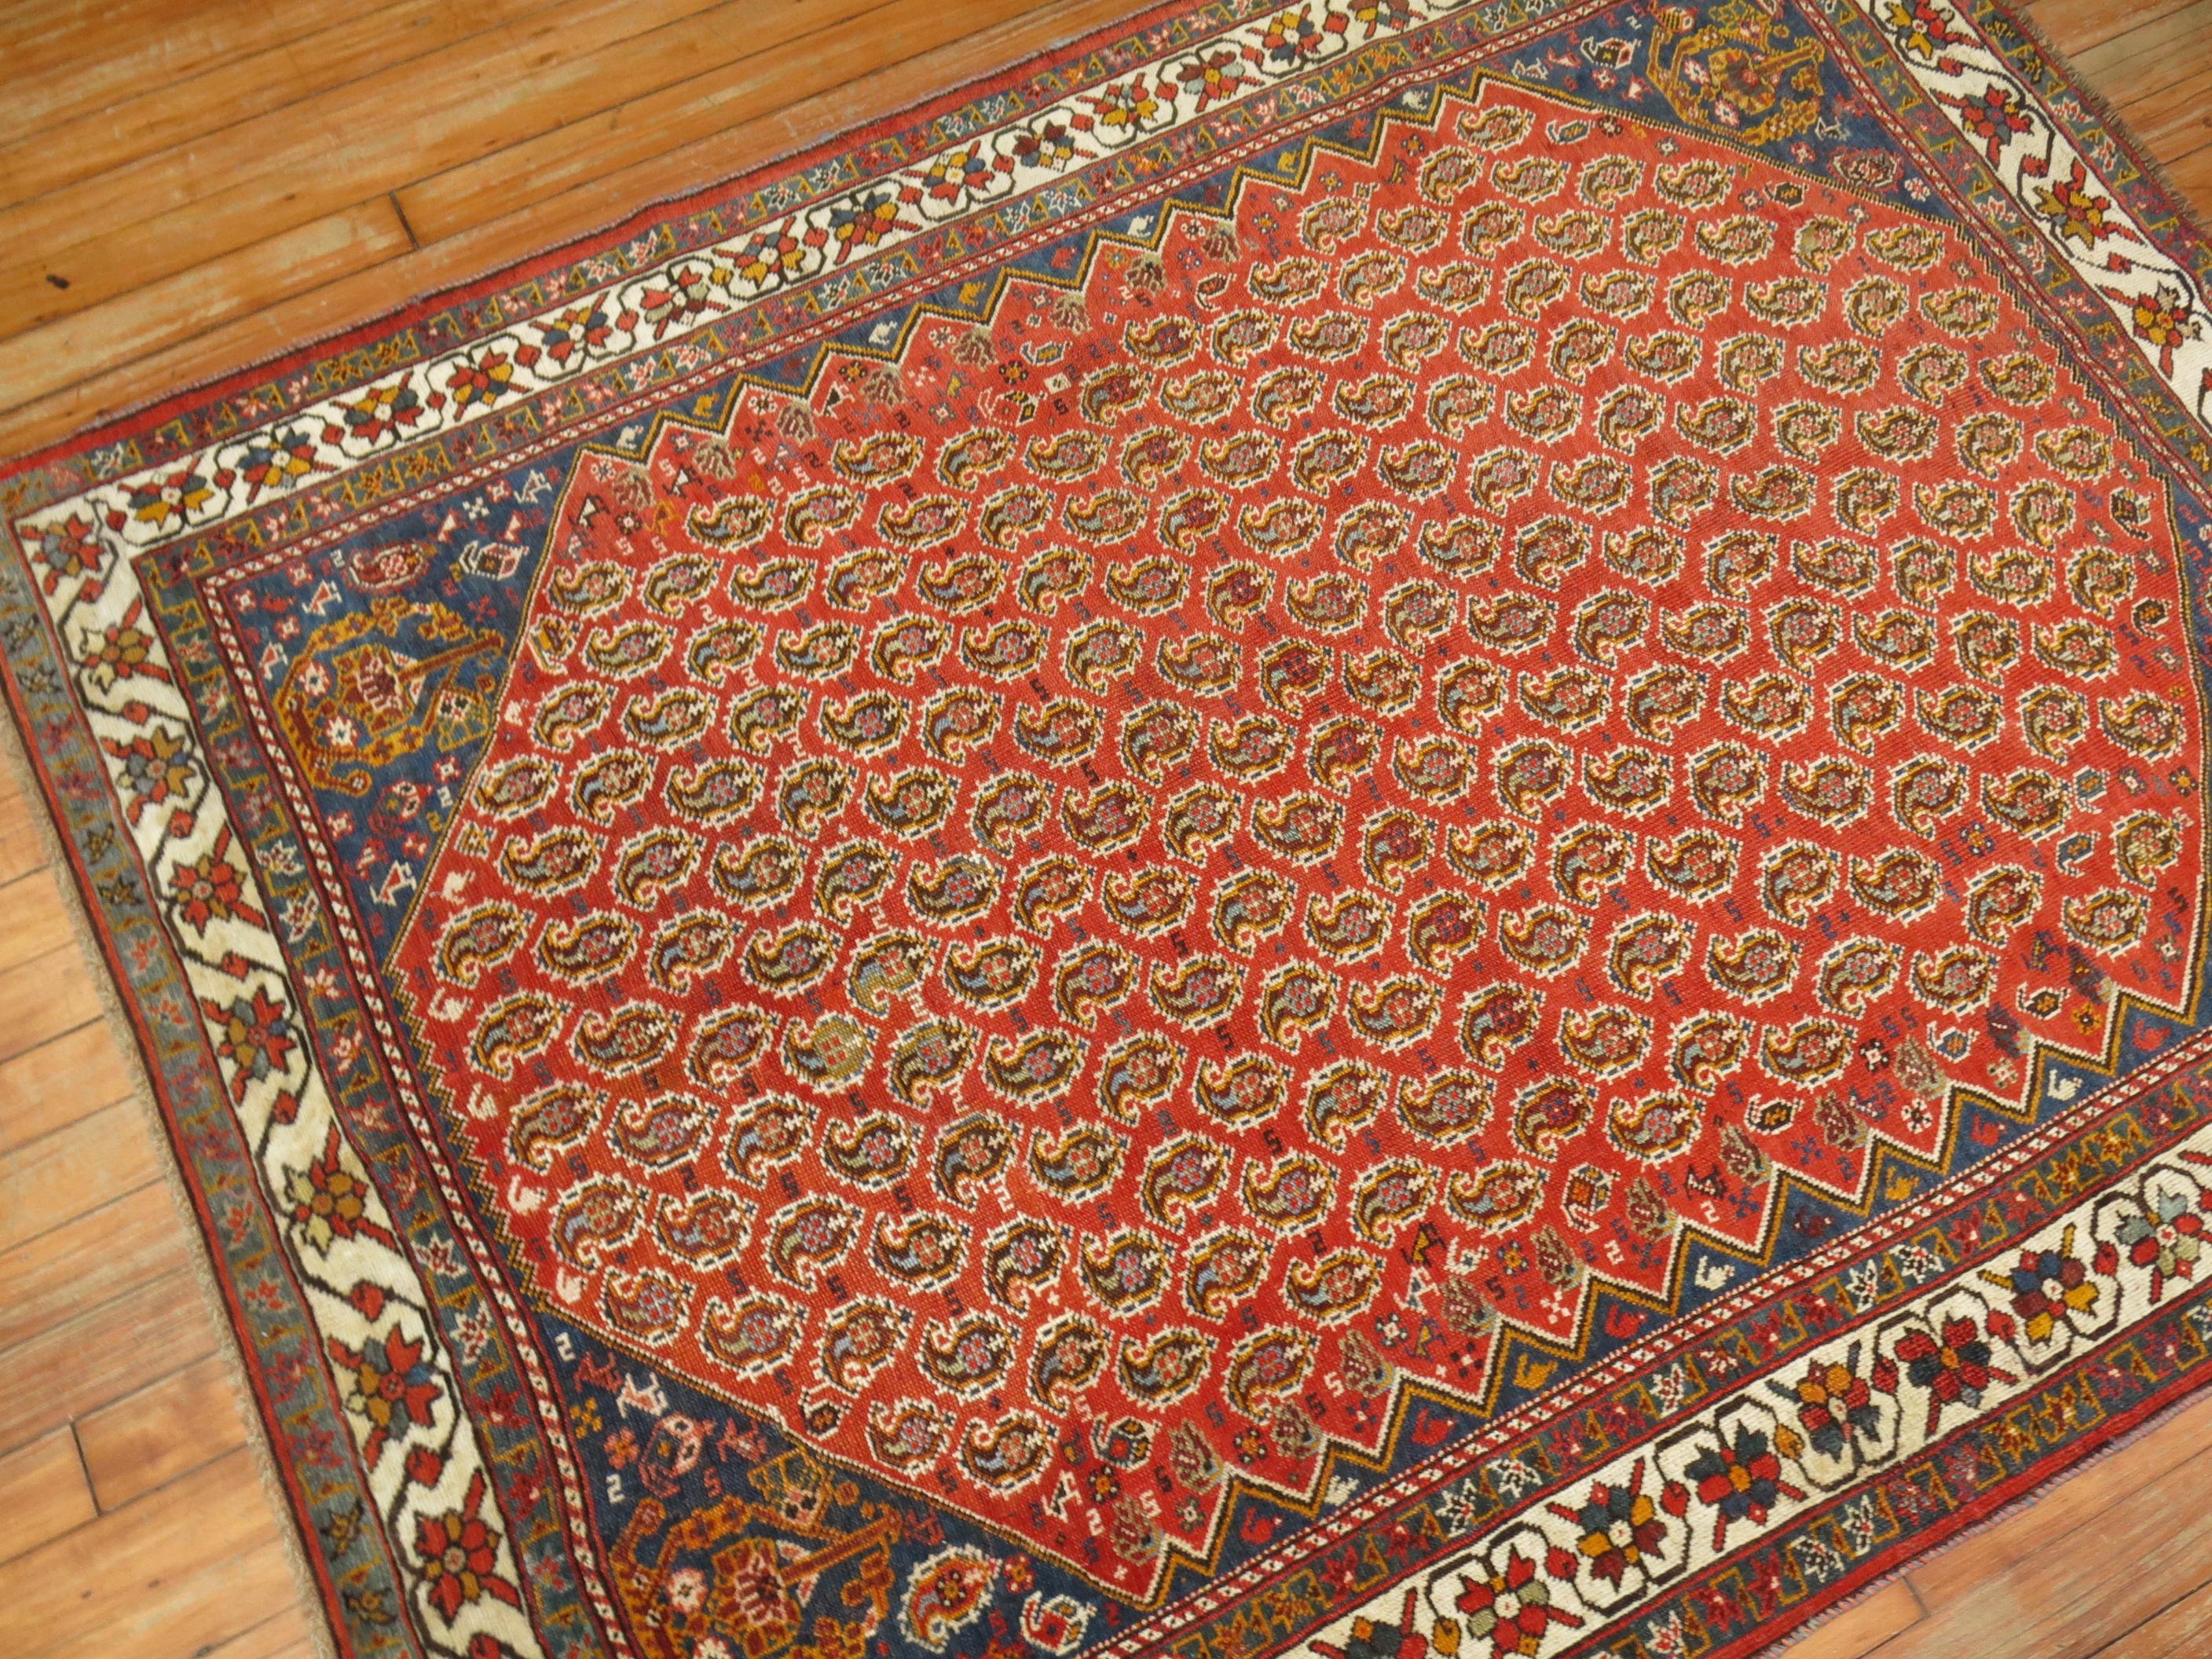 Antique Tribal Persian Rug, Red Ground, Blue Corner, Ivory Border For Sale 1